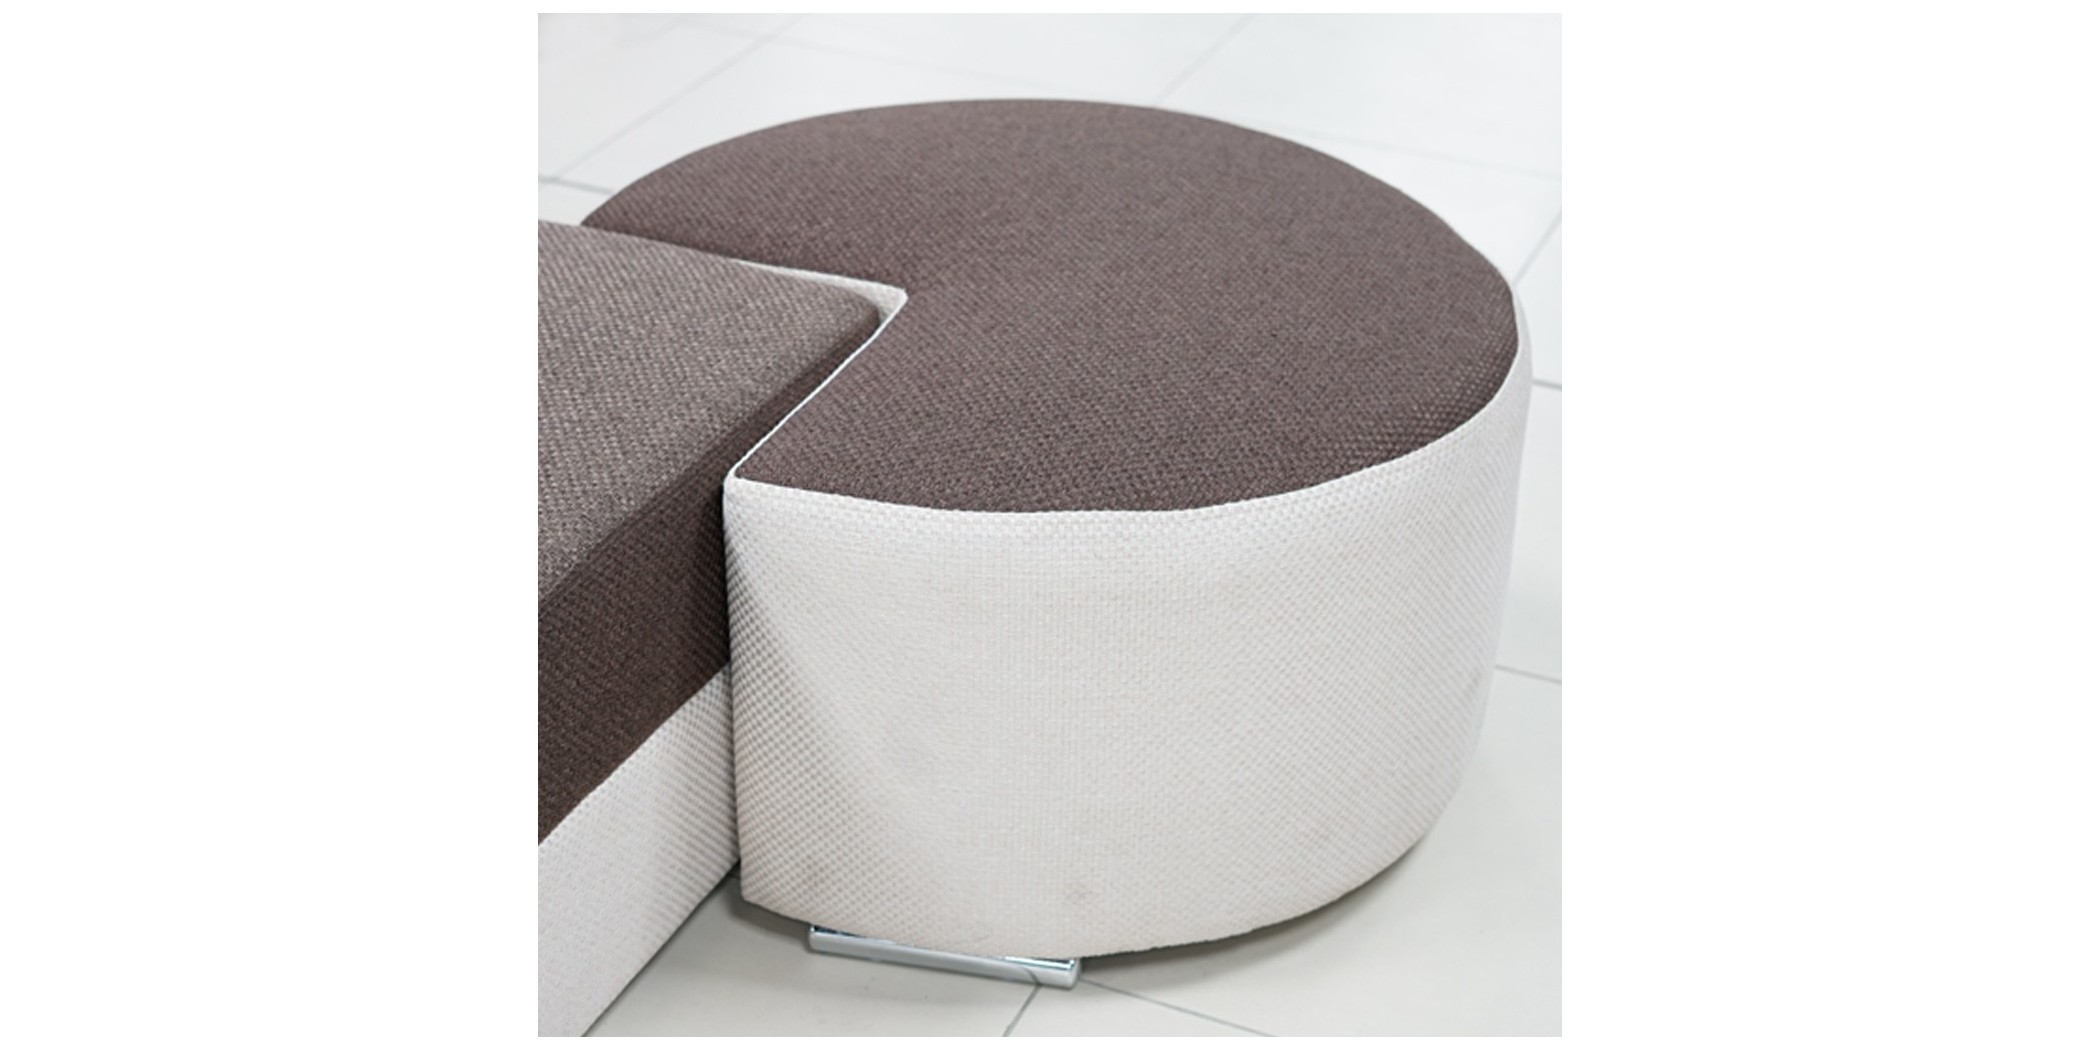 Ontario Sofa Corner Fabric Beige/Brown